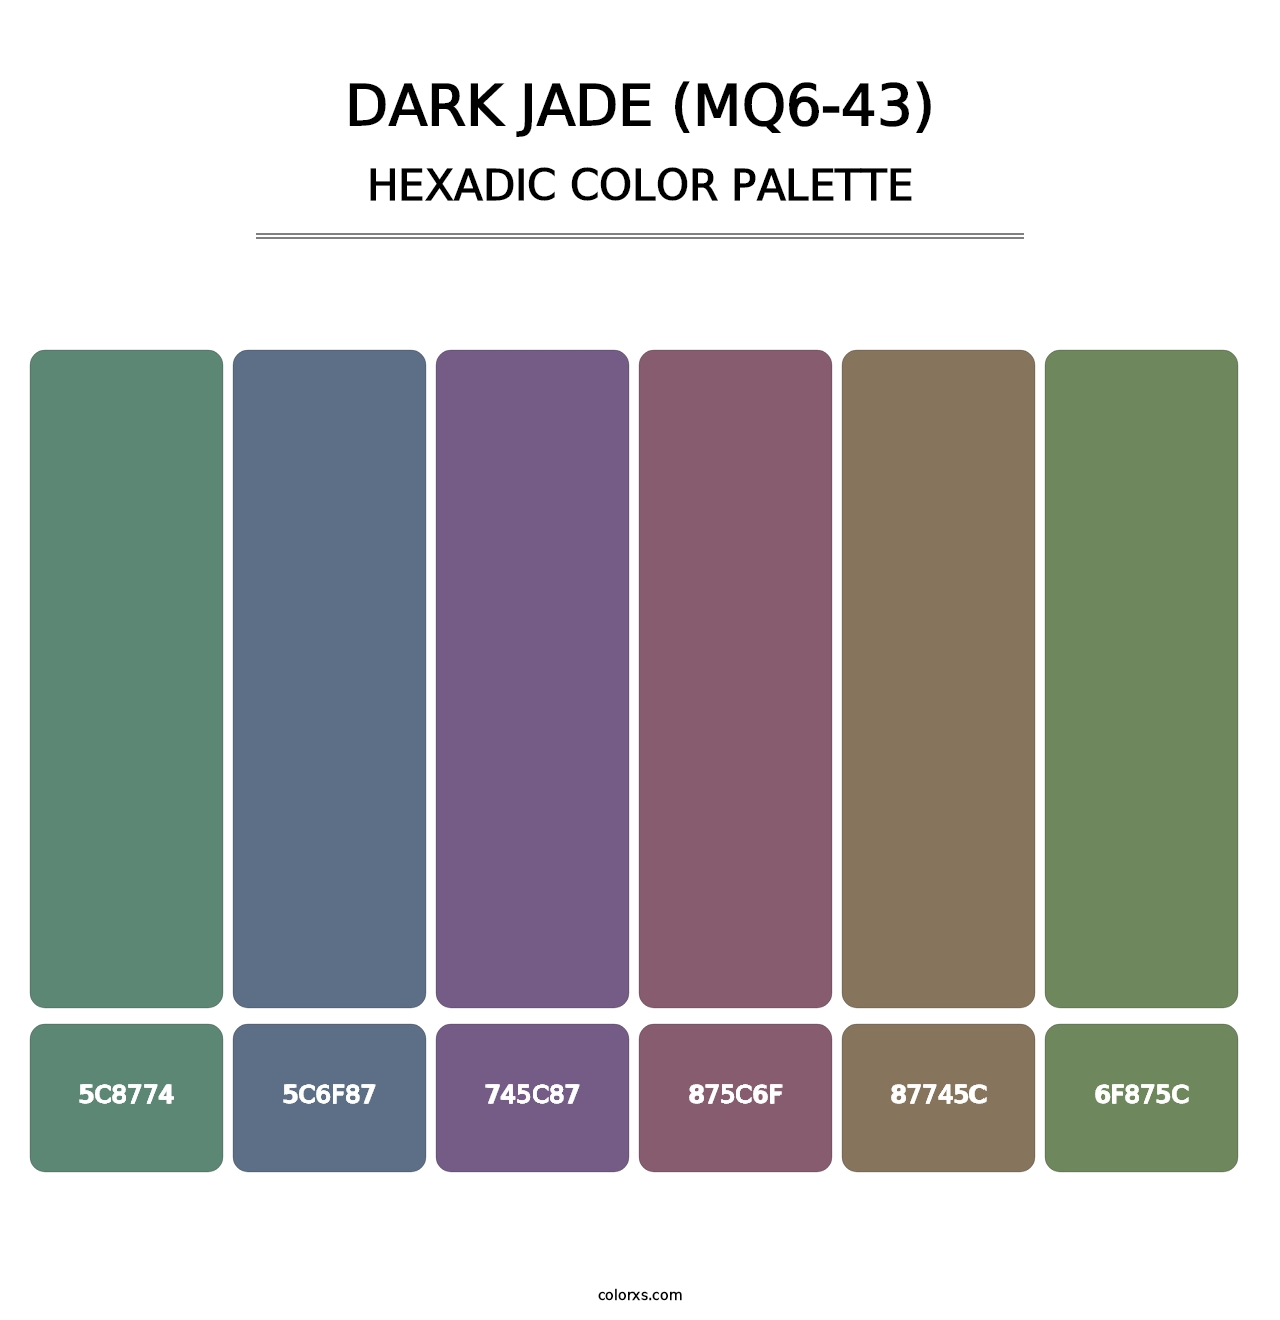 Dark Jade (MQ6-43) - Hexadic Color Palette